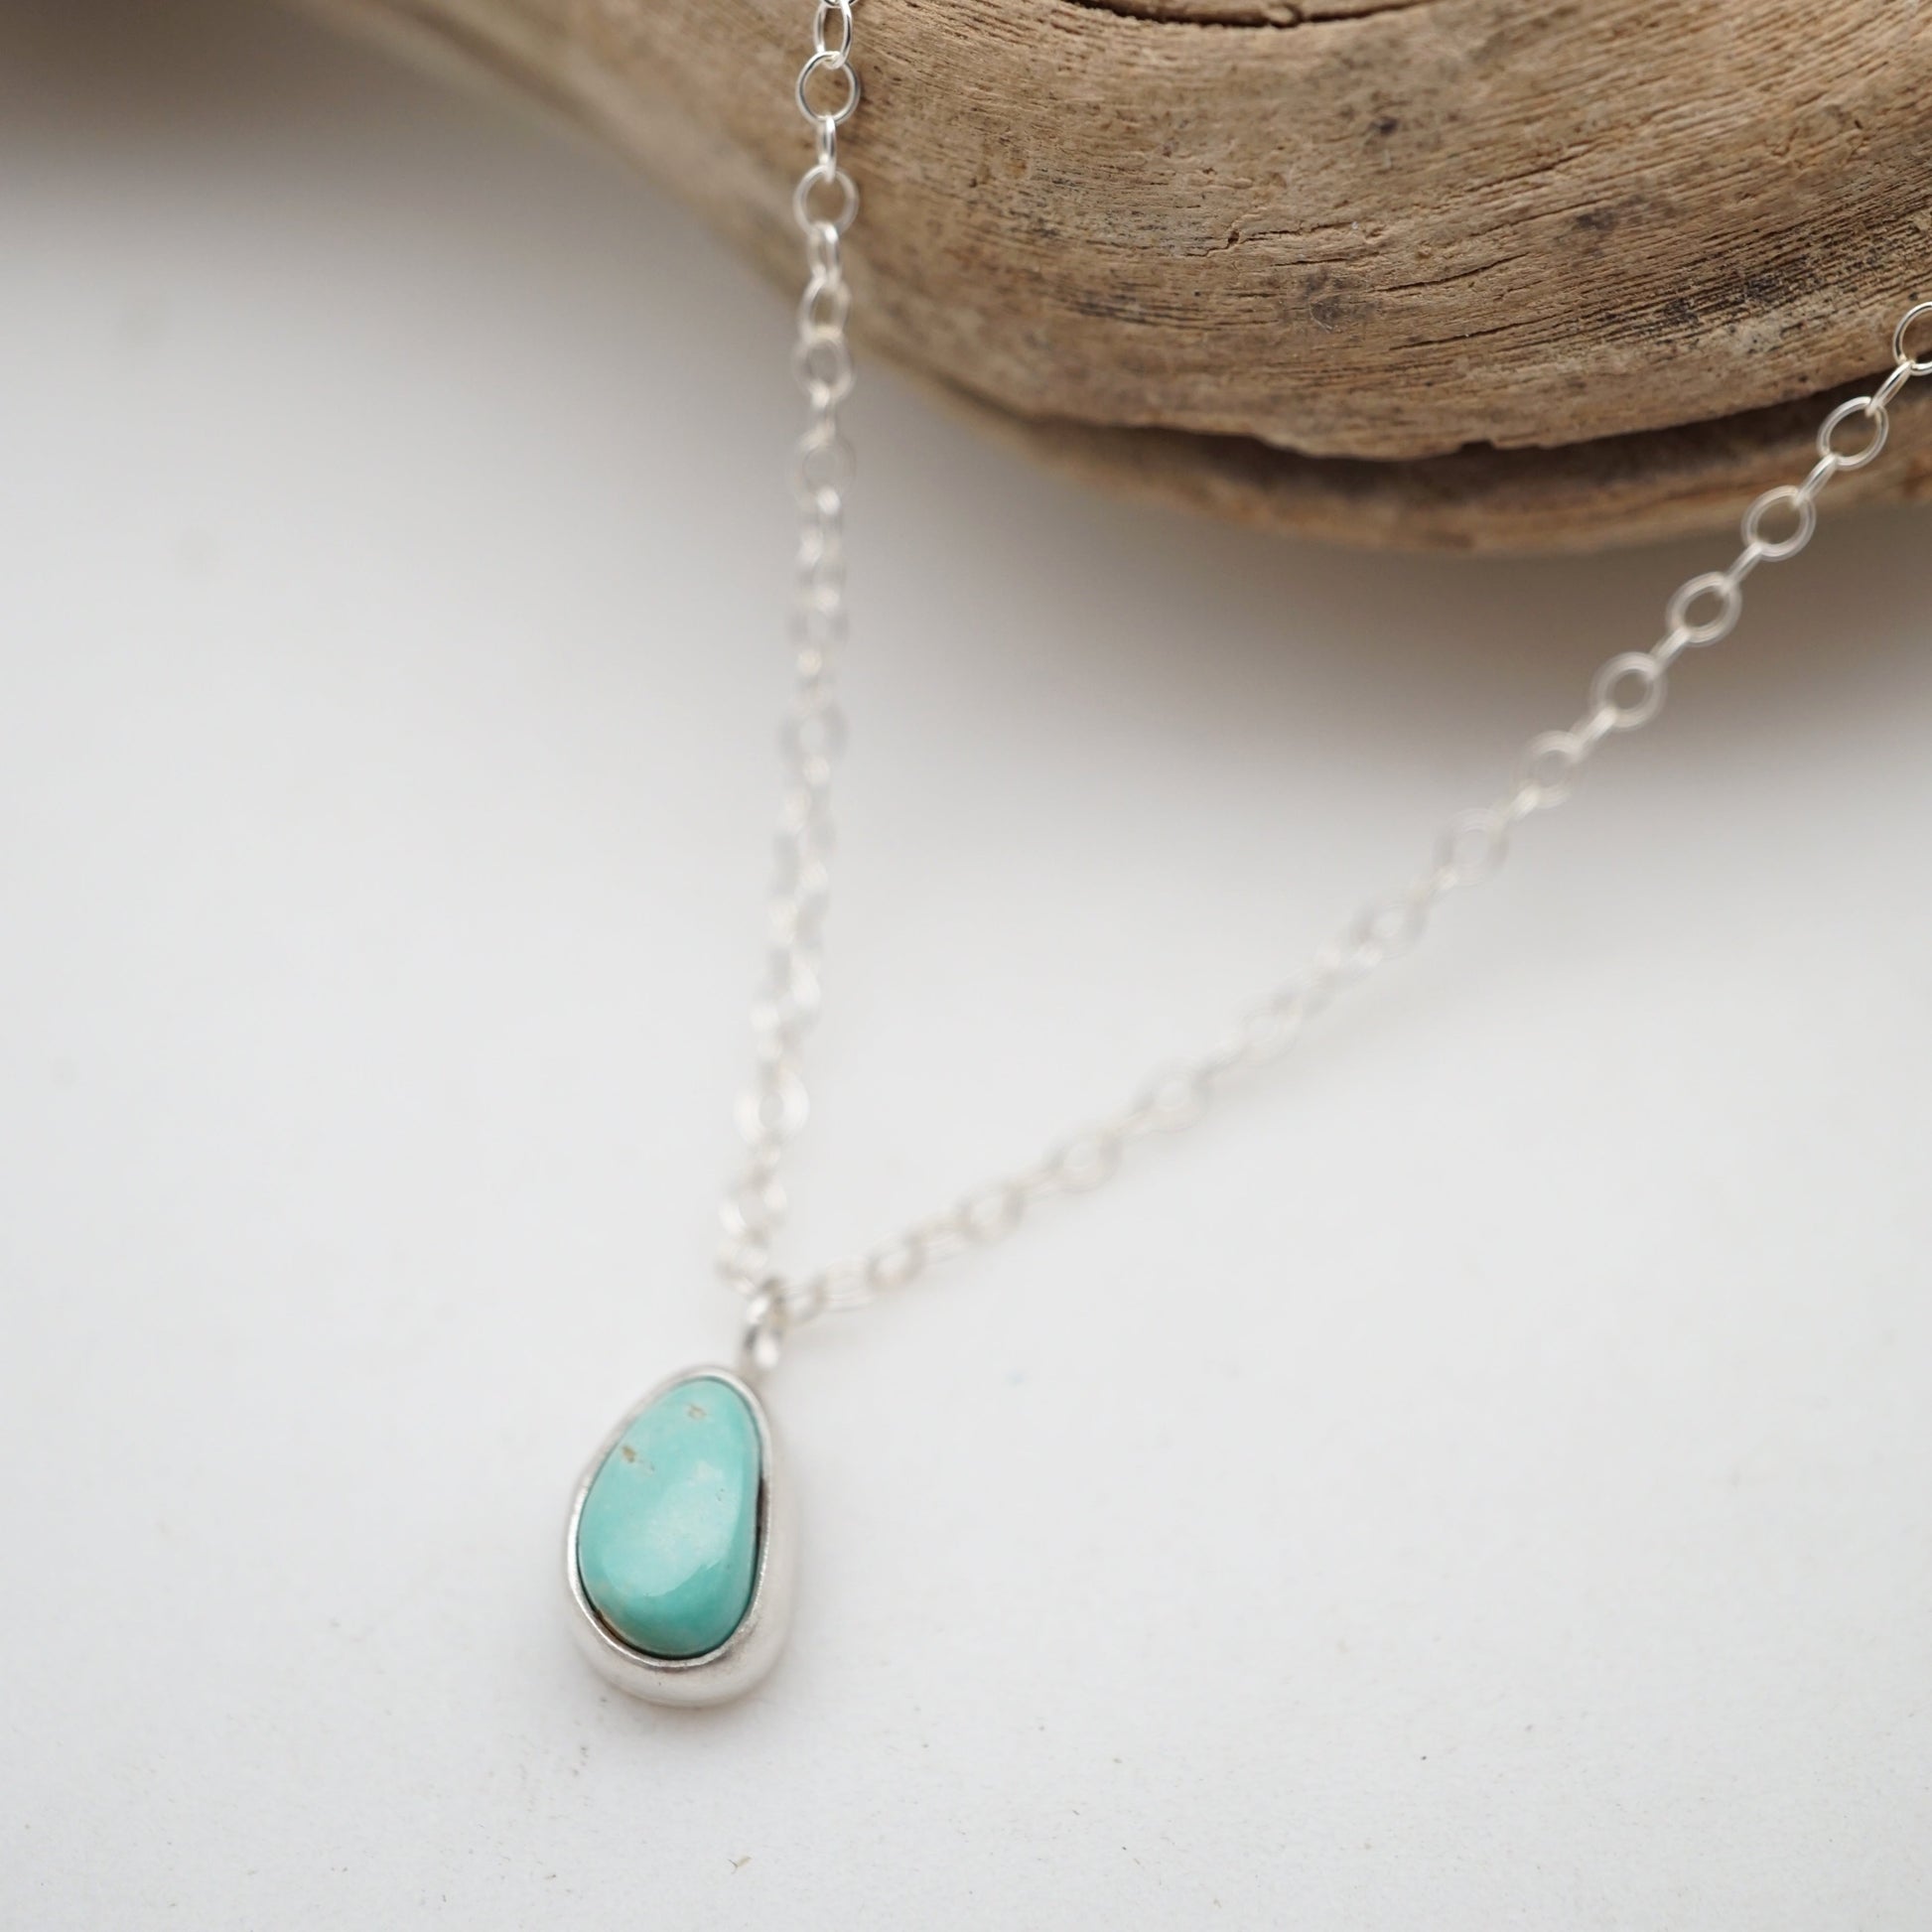 teeny tiny royston turquoise + silver necklace - Lumenrose